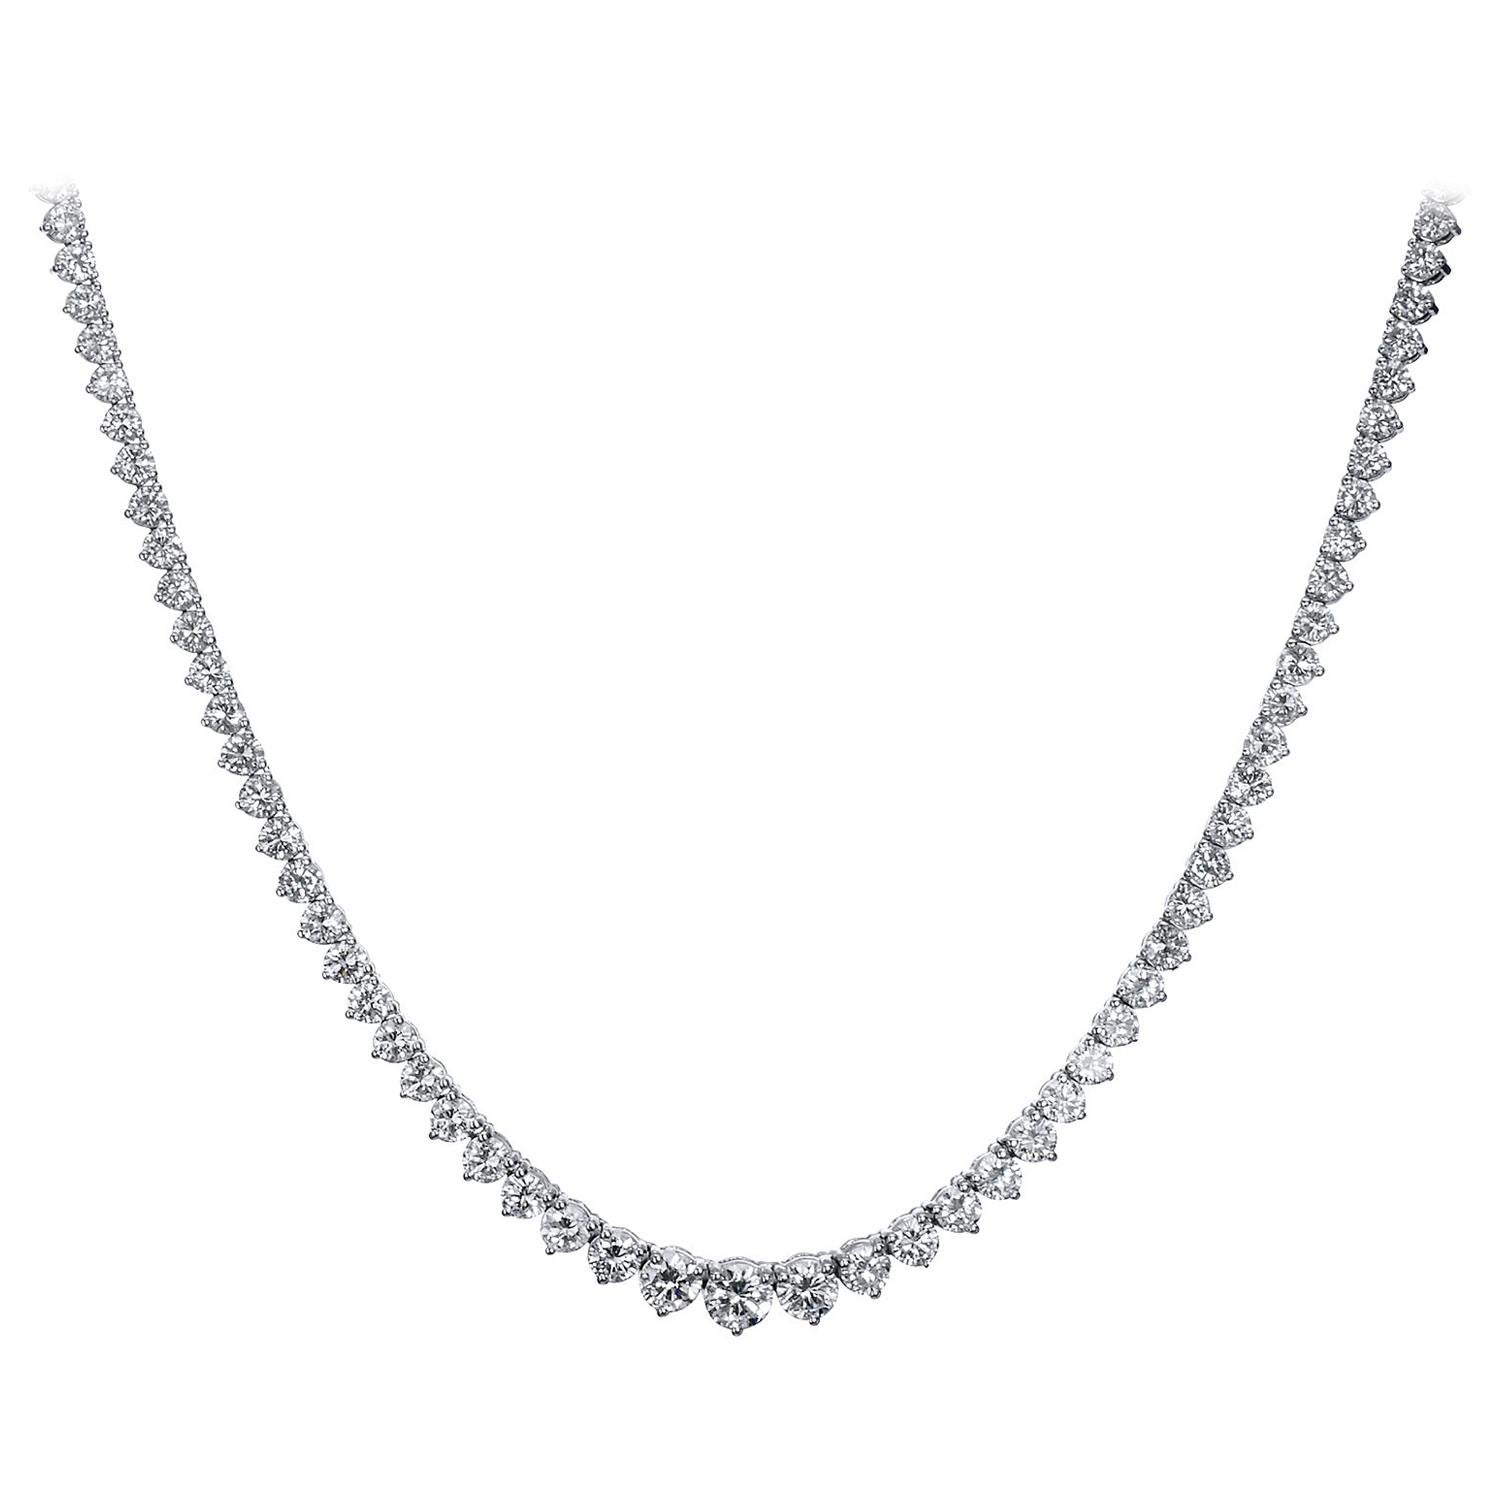 10.13 Carat Diamond Riviera Necklace set in 18 Karat White Gold 16.5 inches Long